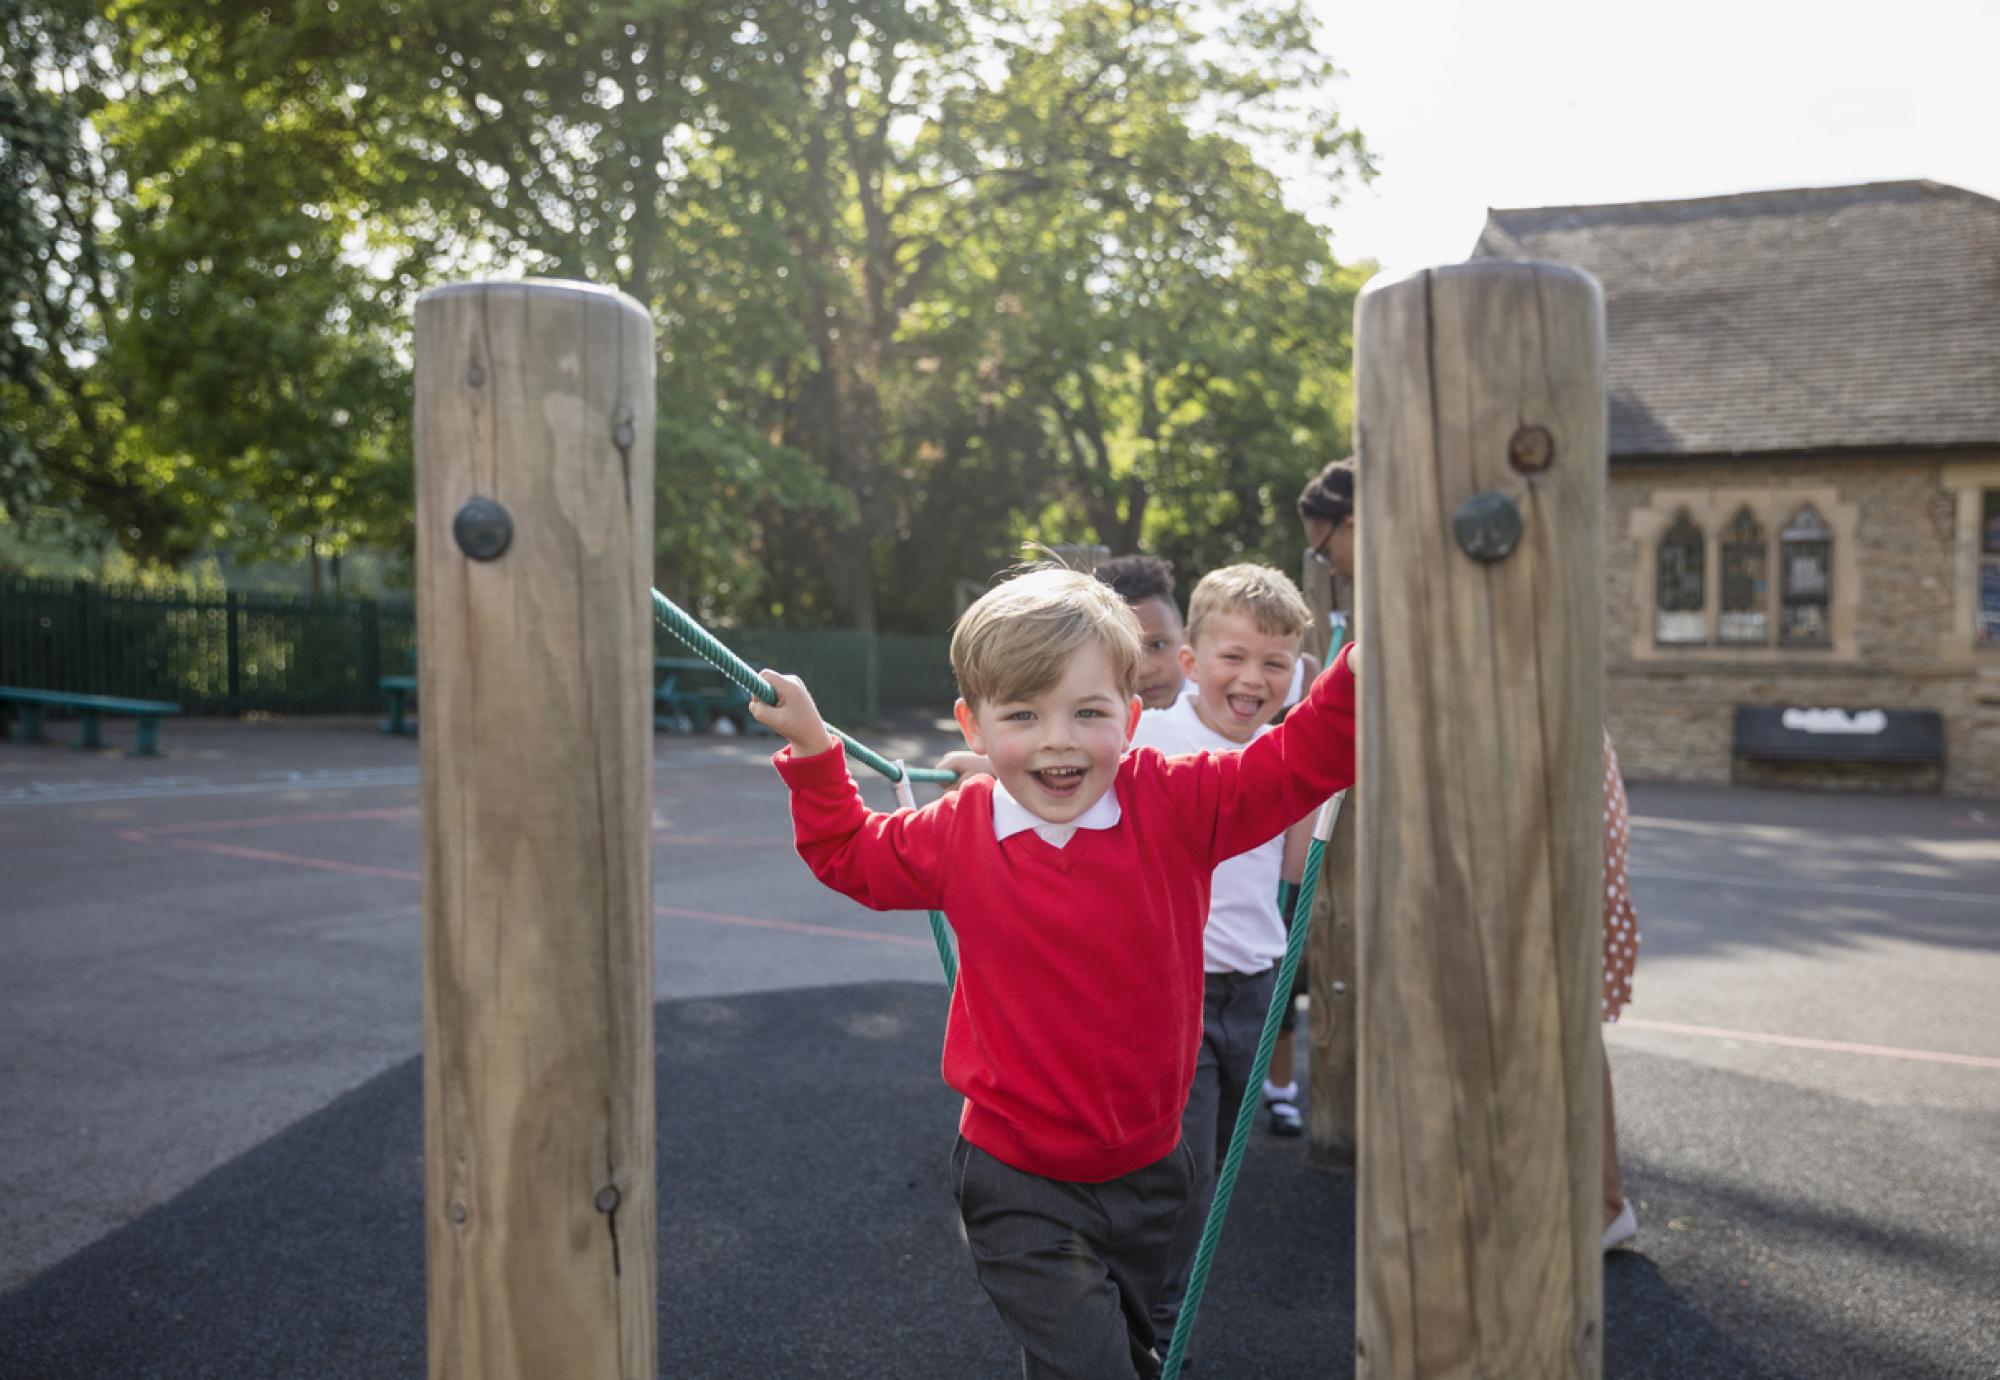 Children playing on playground at school